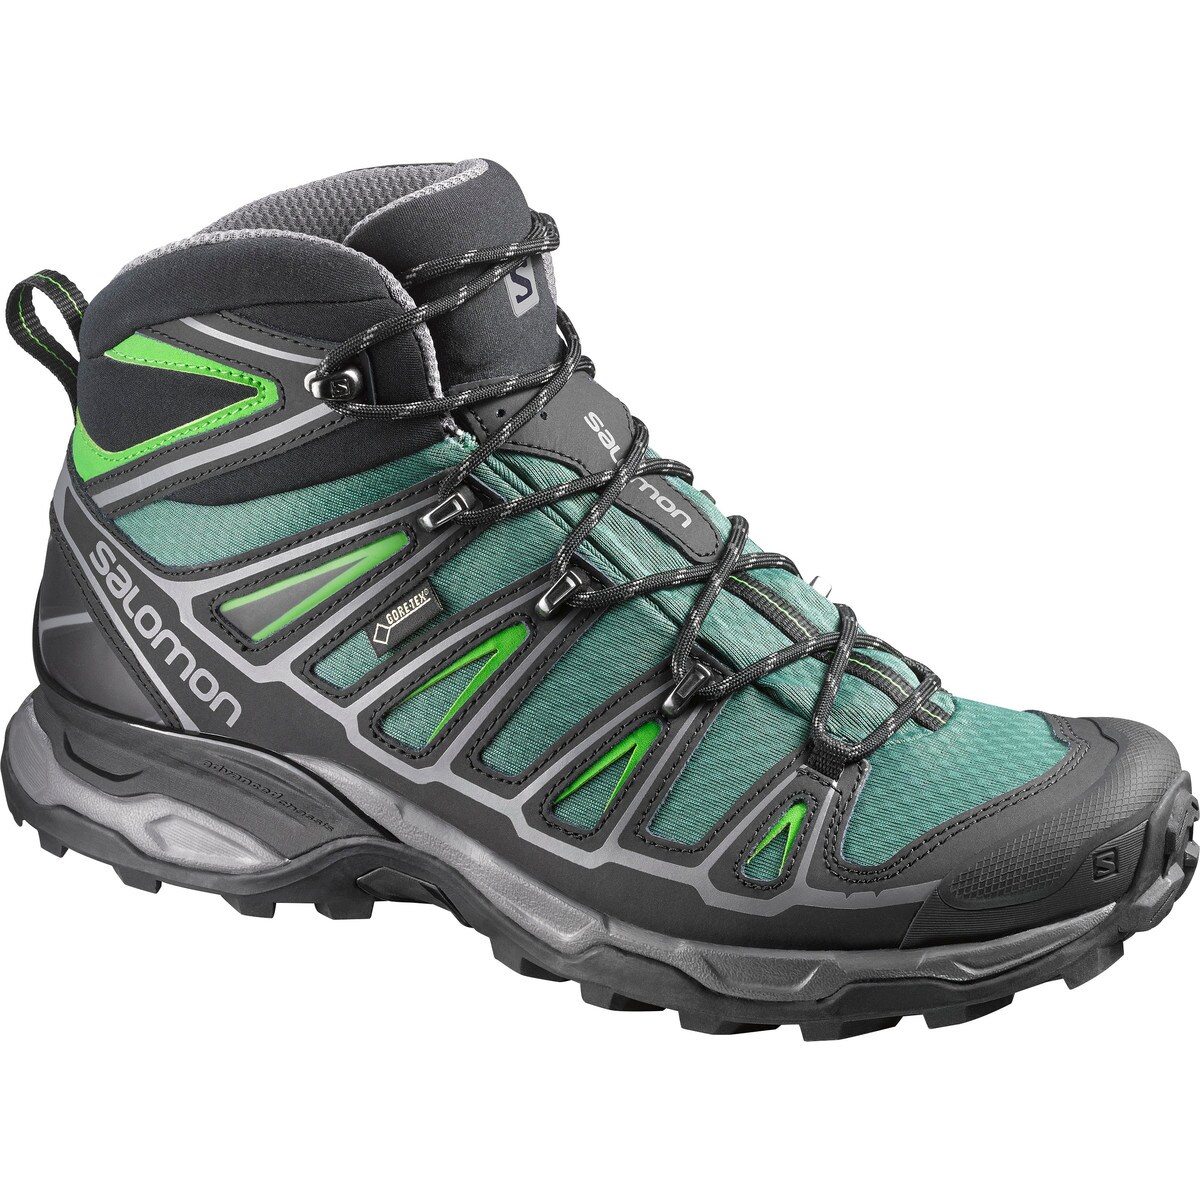 Salomon X Ultra Mid 2 GTX Hiking Boot - Men's Bettle Green/Black/Spring Green, US 9.5/UK 9.0